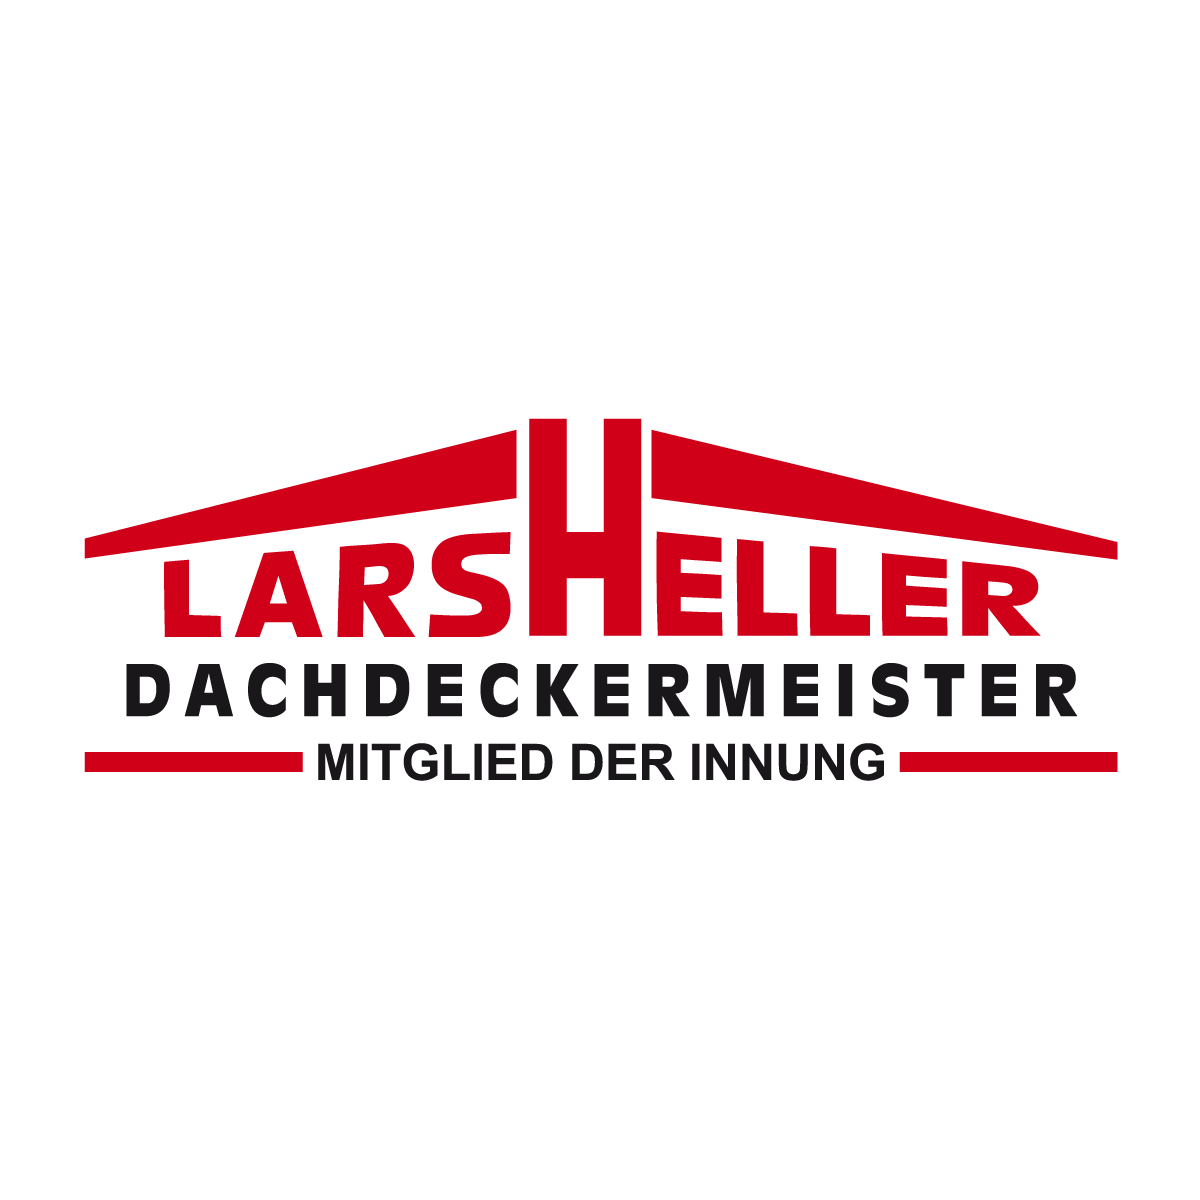 Lars Heller Dachdeckermeister GmbH & Co. KG Logo